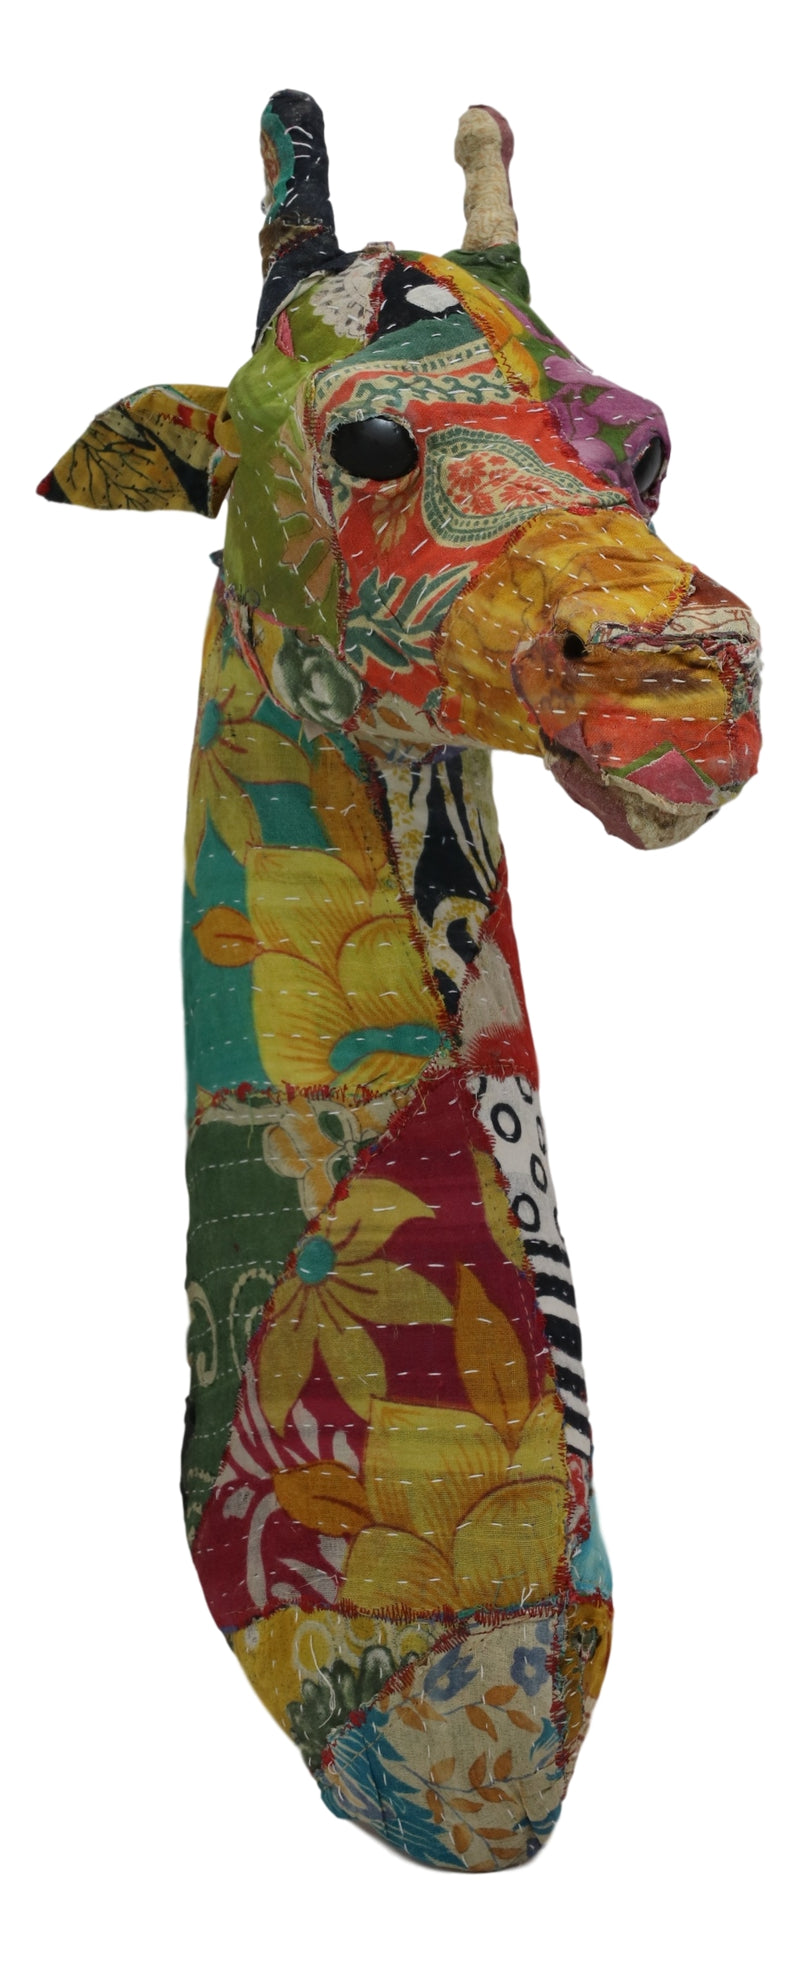 Safari Wild Giraffe Hand Crafted Paper Mache In Sari Fabric Wall Head Decor